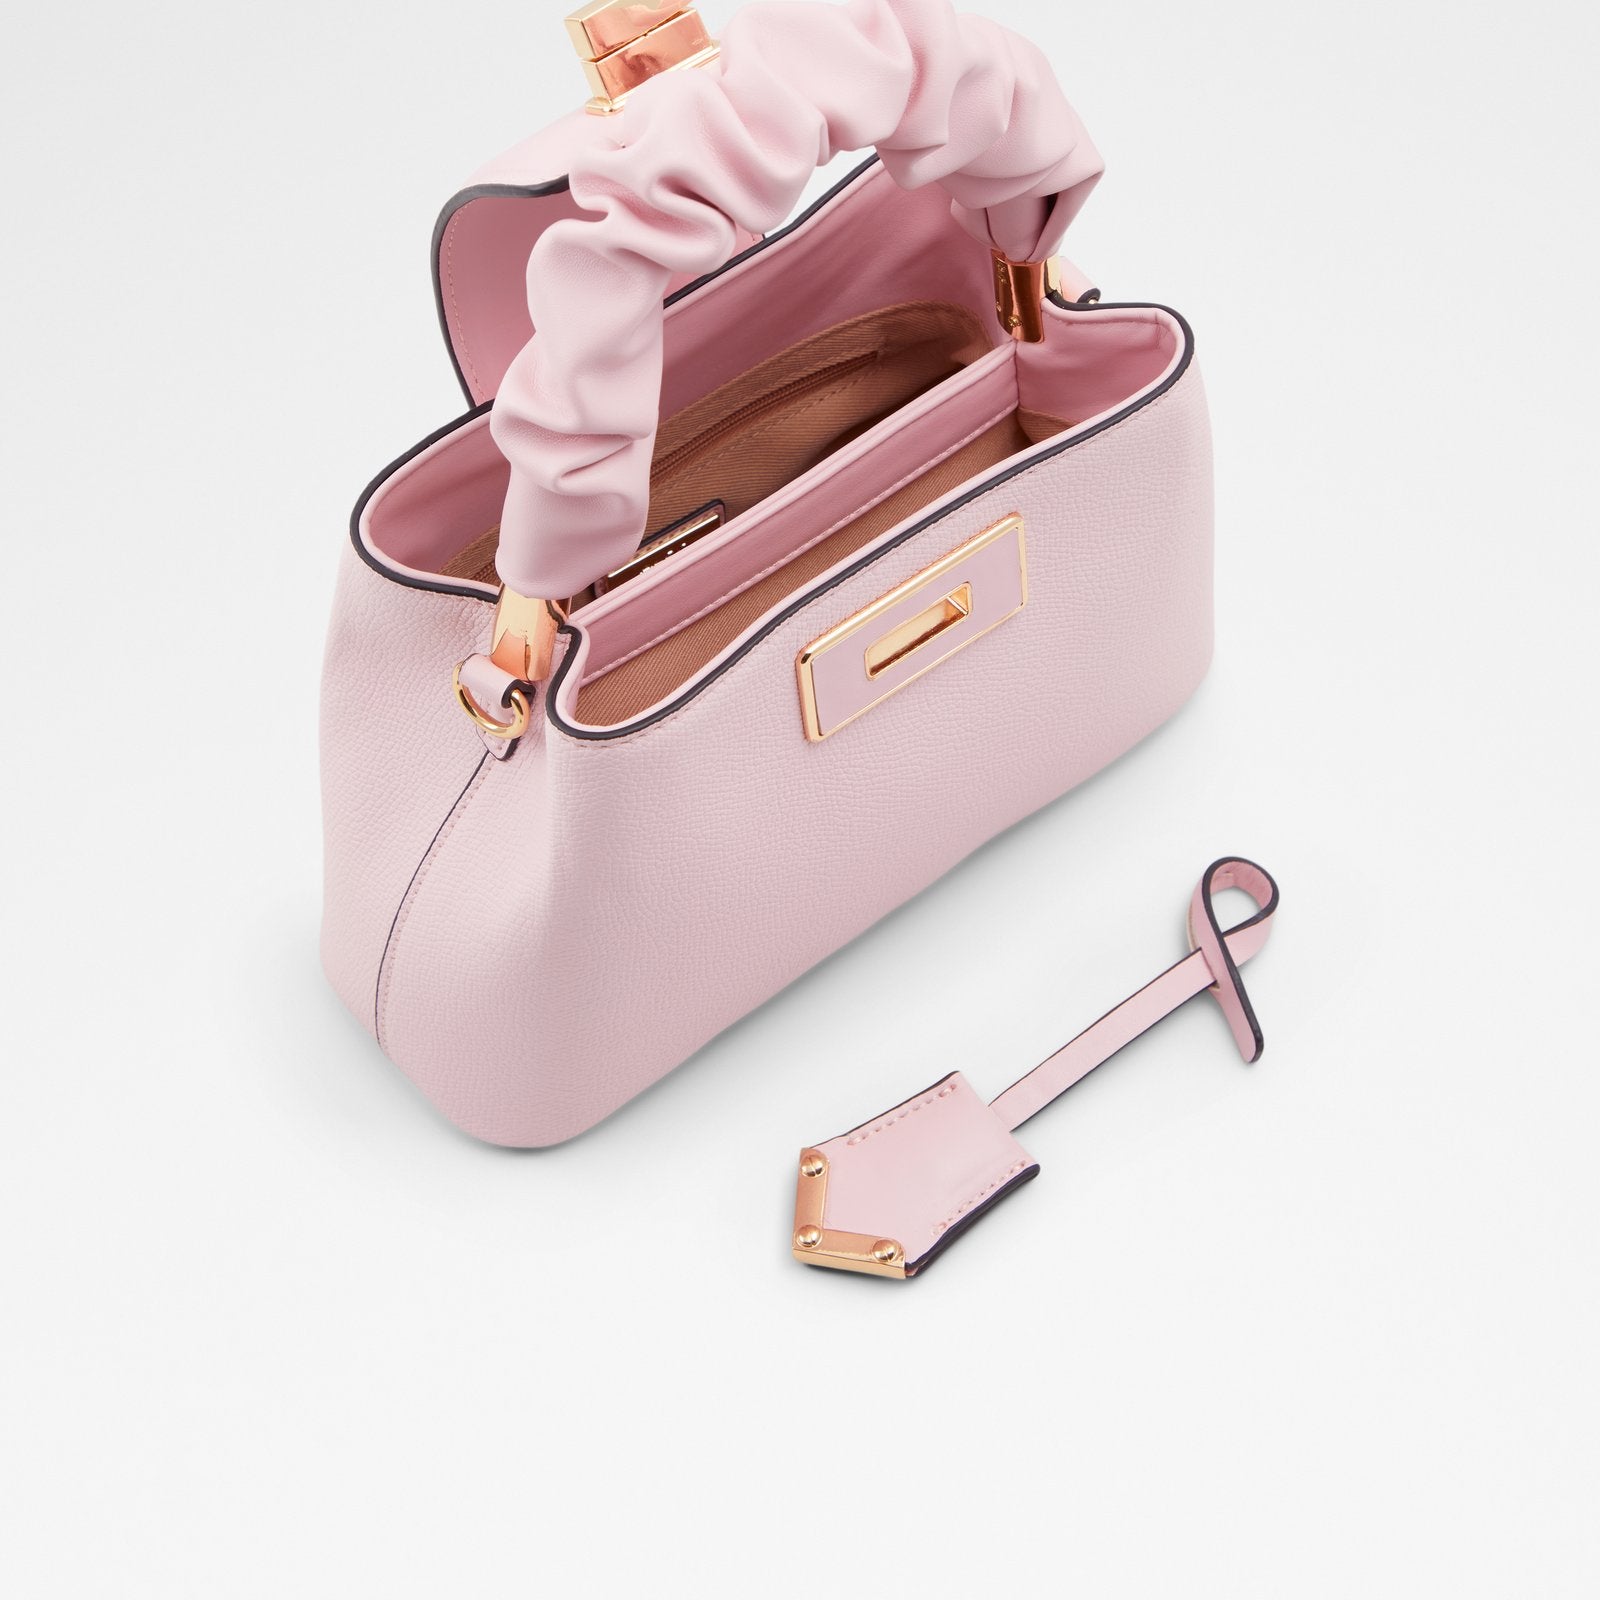 Snakie Bag - Pink - ALDO KSA